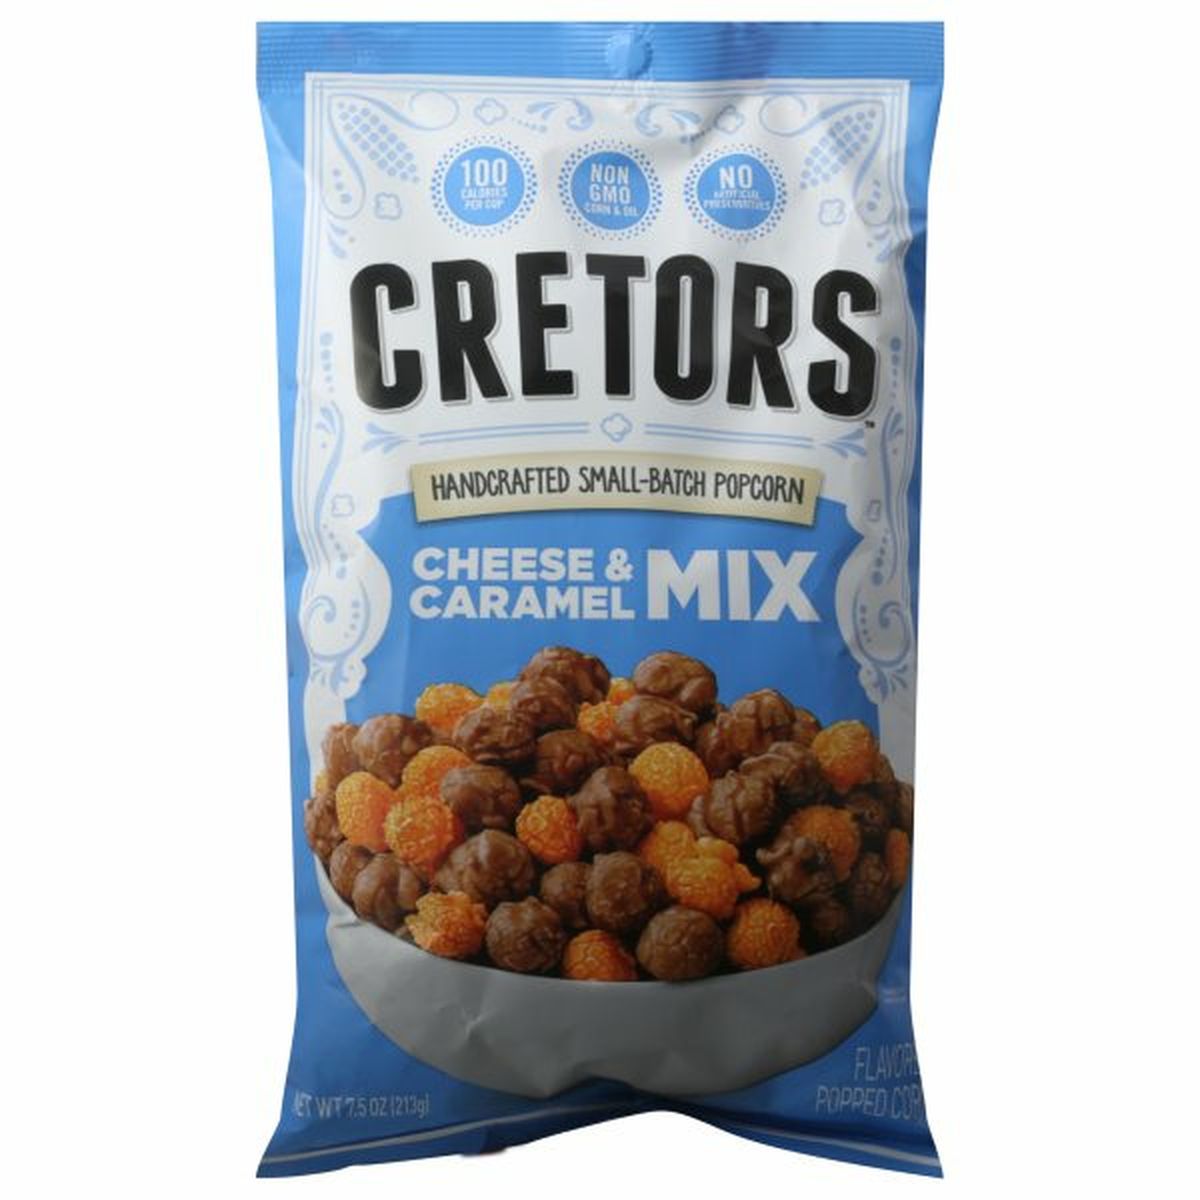 Calories in Cretors Popcorn, Cheese & Caramel Mix